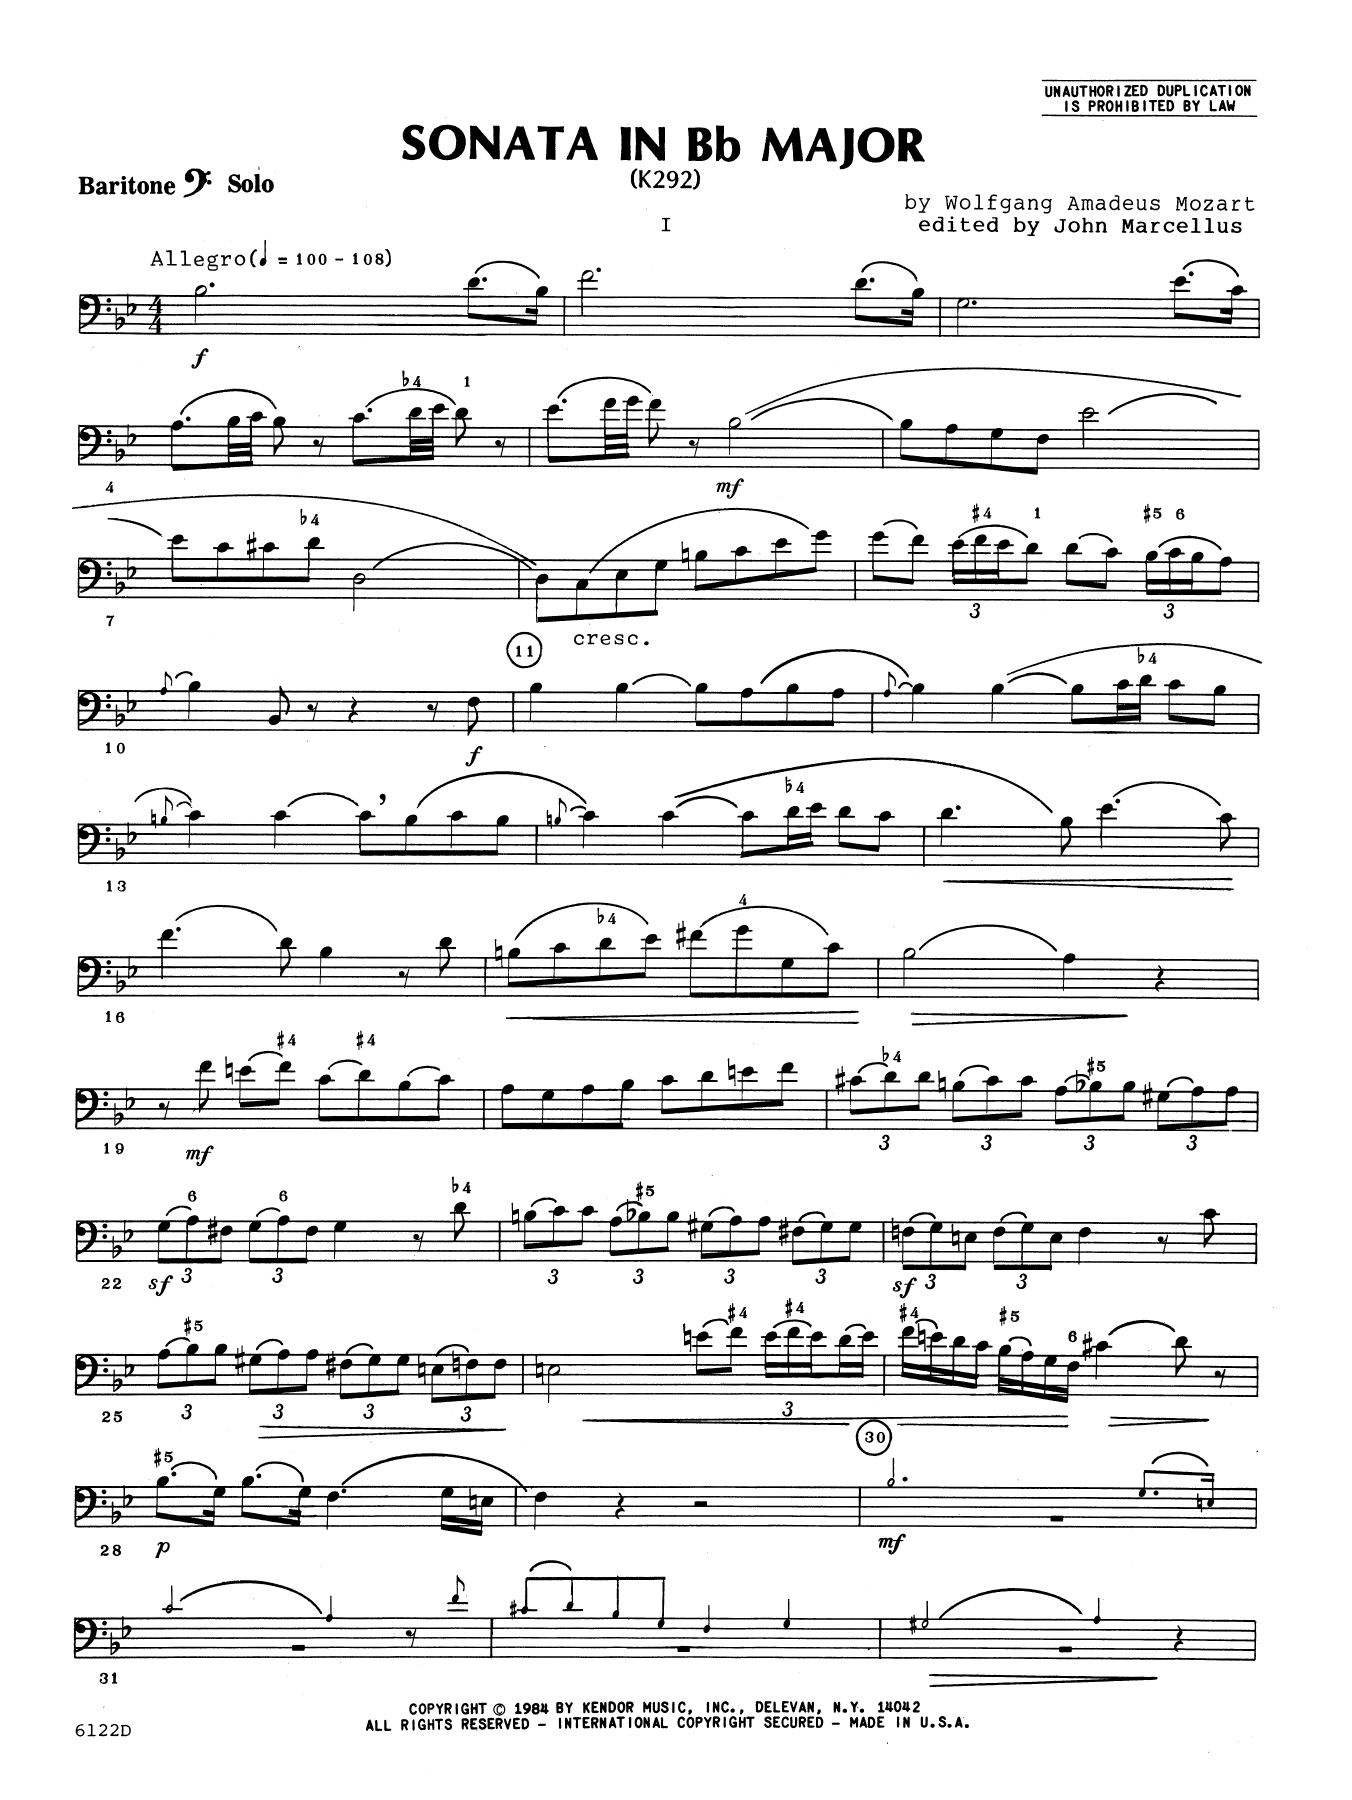 Download John Marcellus Sonata In Bb Major (K292) - Baritone B. Sheet Music